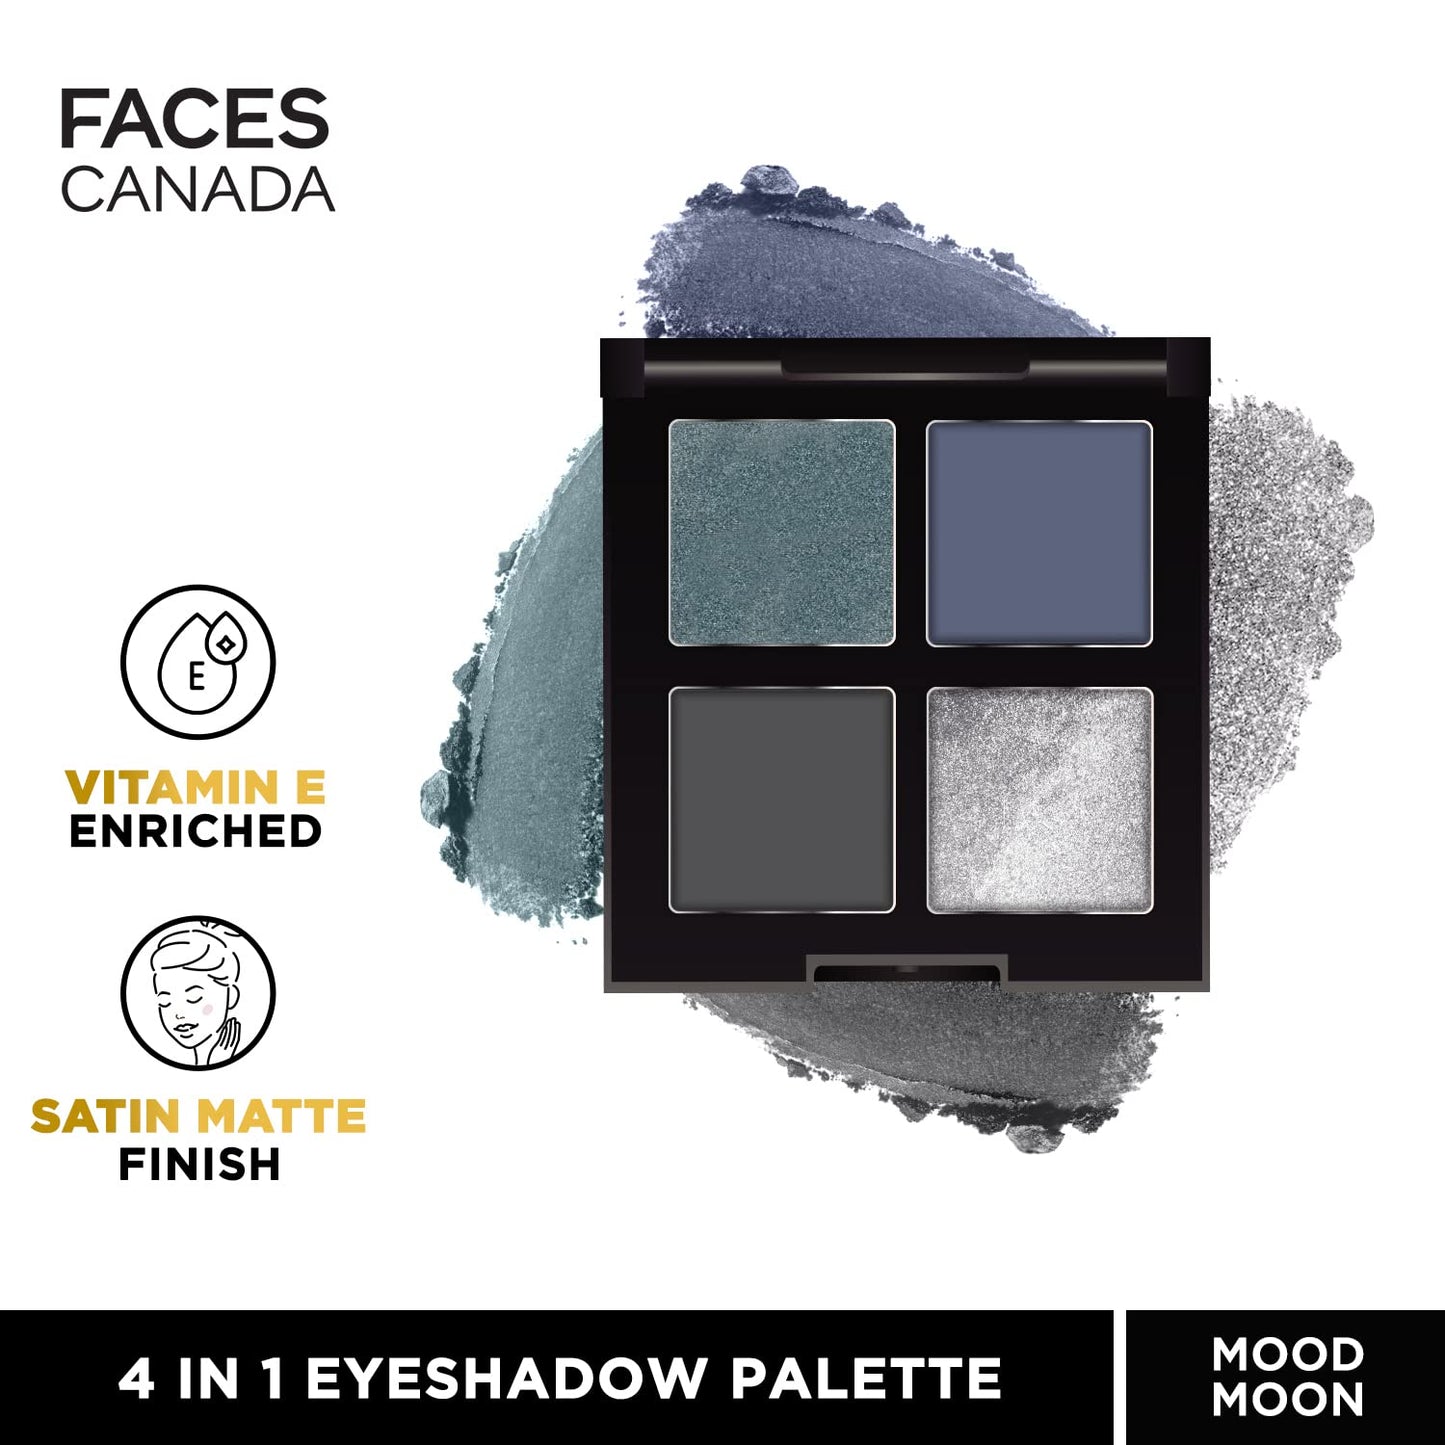 FACES CANADA 4 IN 1 Quad Eyeshadow Palette - Moody Moon 06, 4.8g | Shimmer & Matte Shades | Satin Matte Finish Eye Shadow Quartet | Intense Pigment | Long Lasting | Vitamin E Enriched | Vegan 